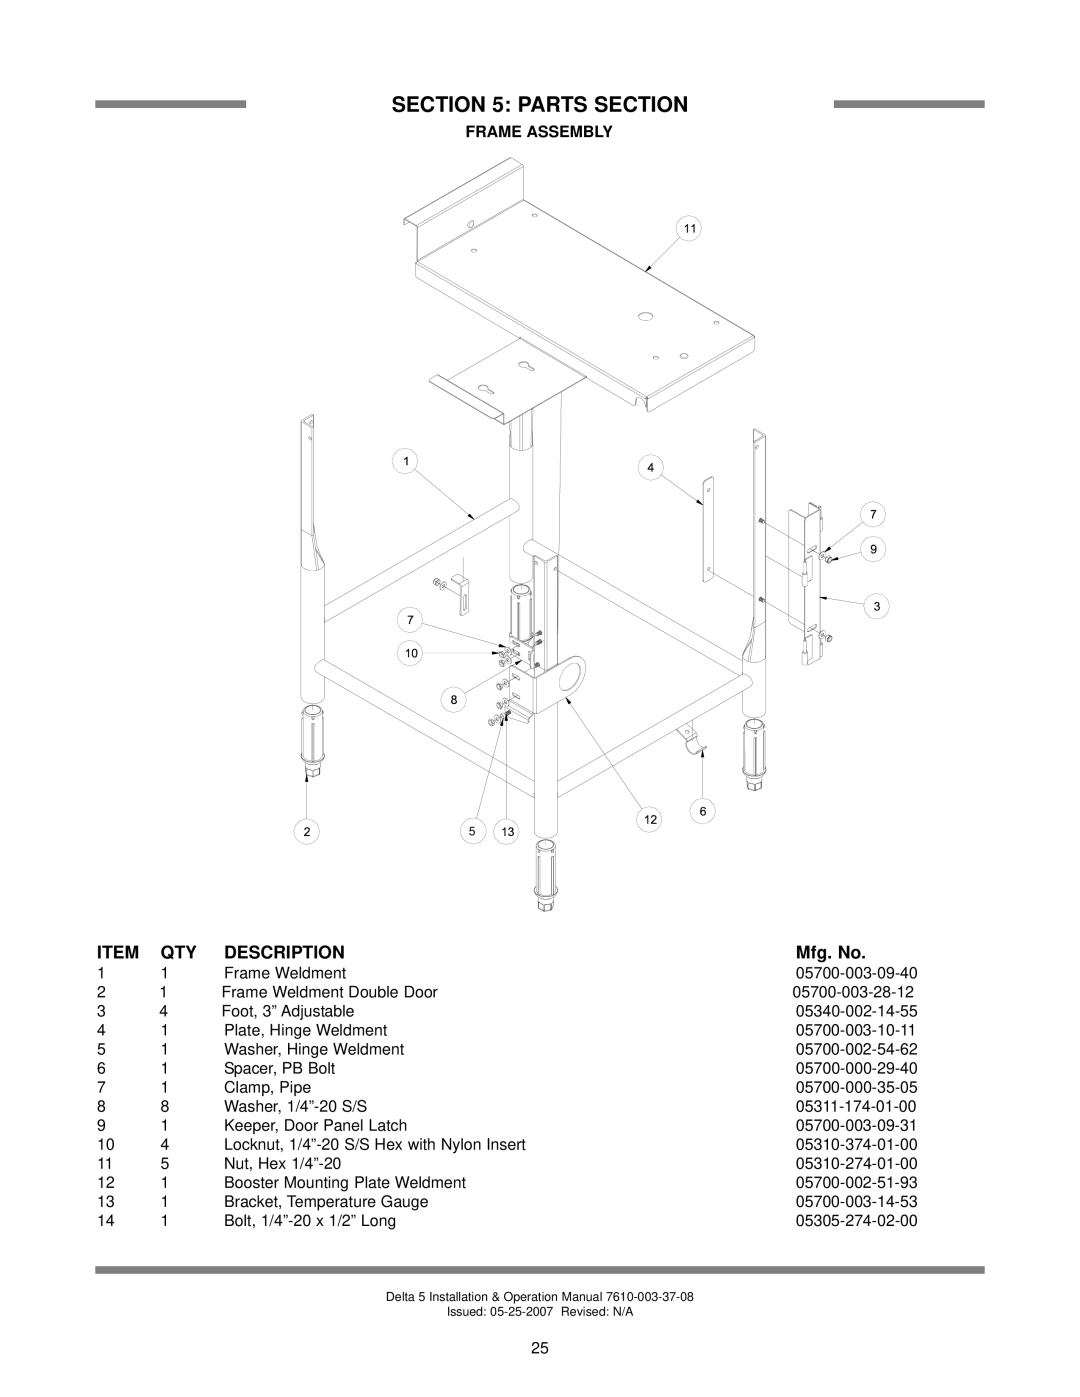 Jackson DELTA 5 D, Delta 5 technical manual Frame Assembly, Parts Section, Description, Mfg. No 